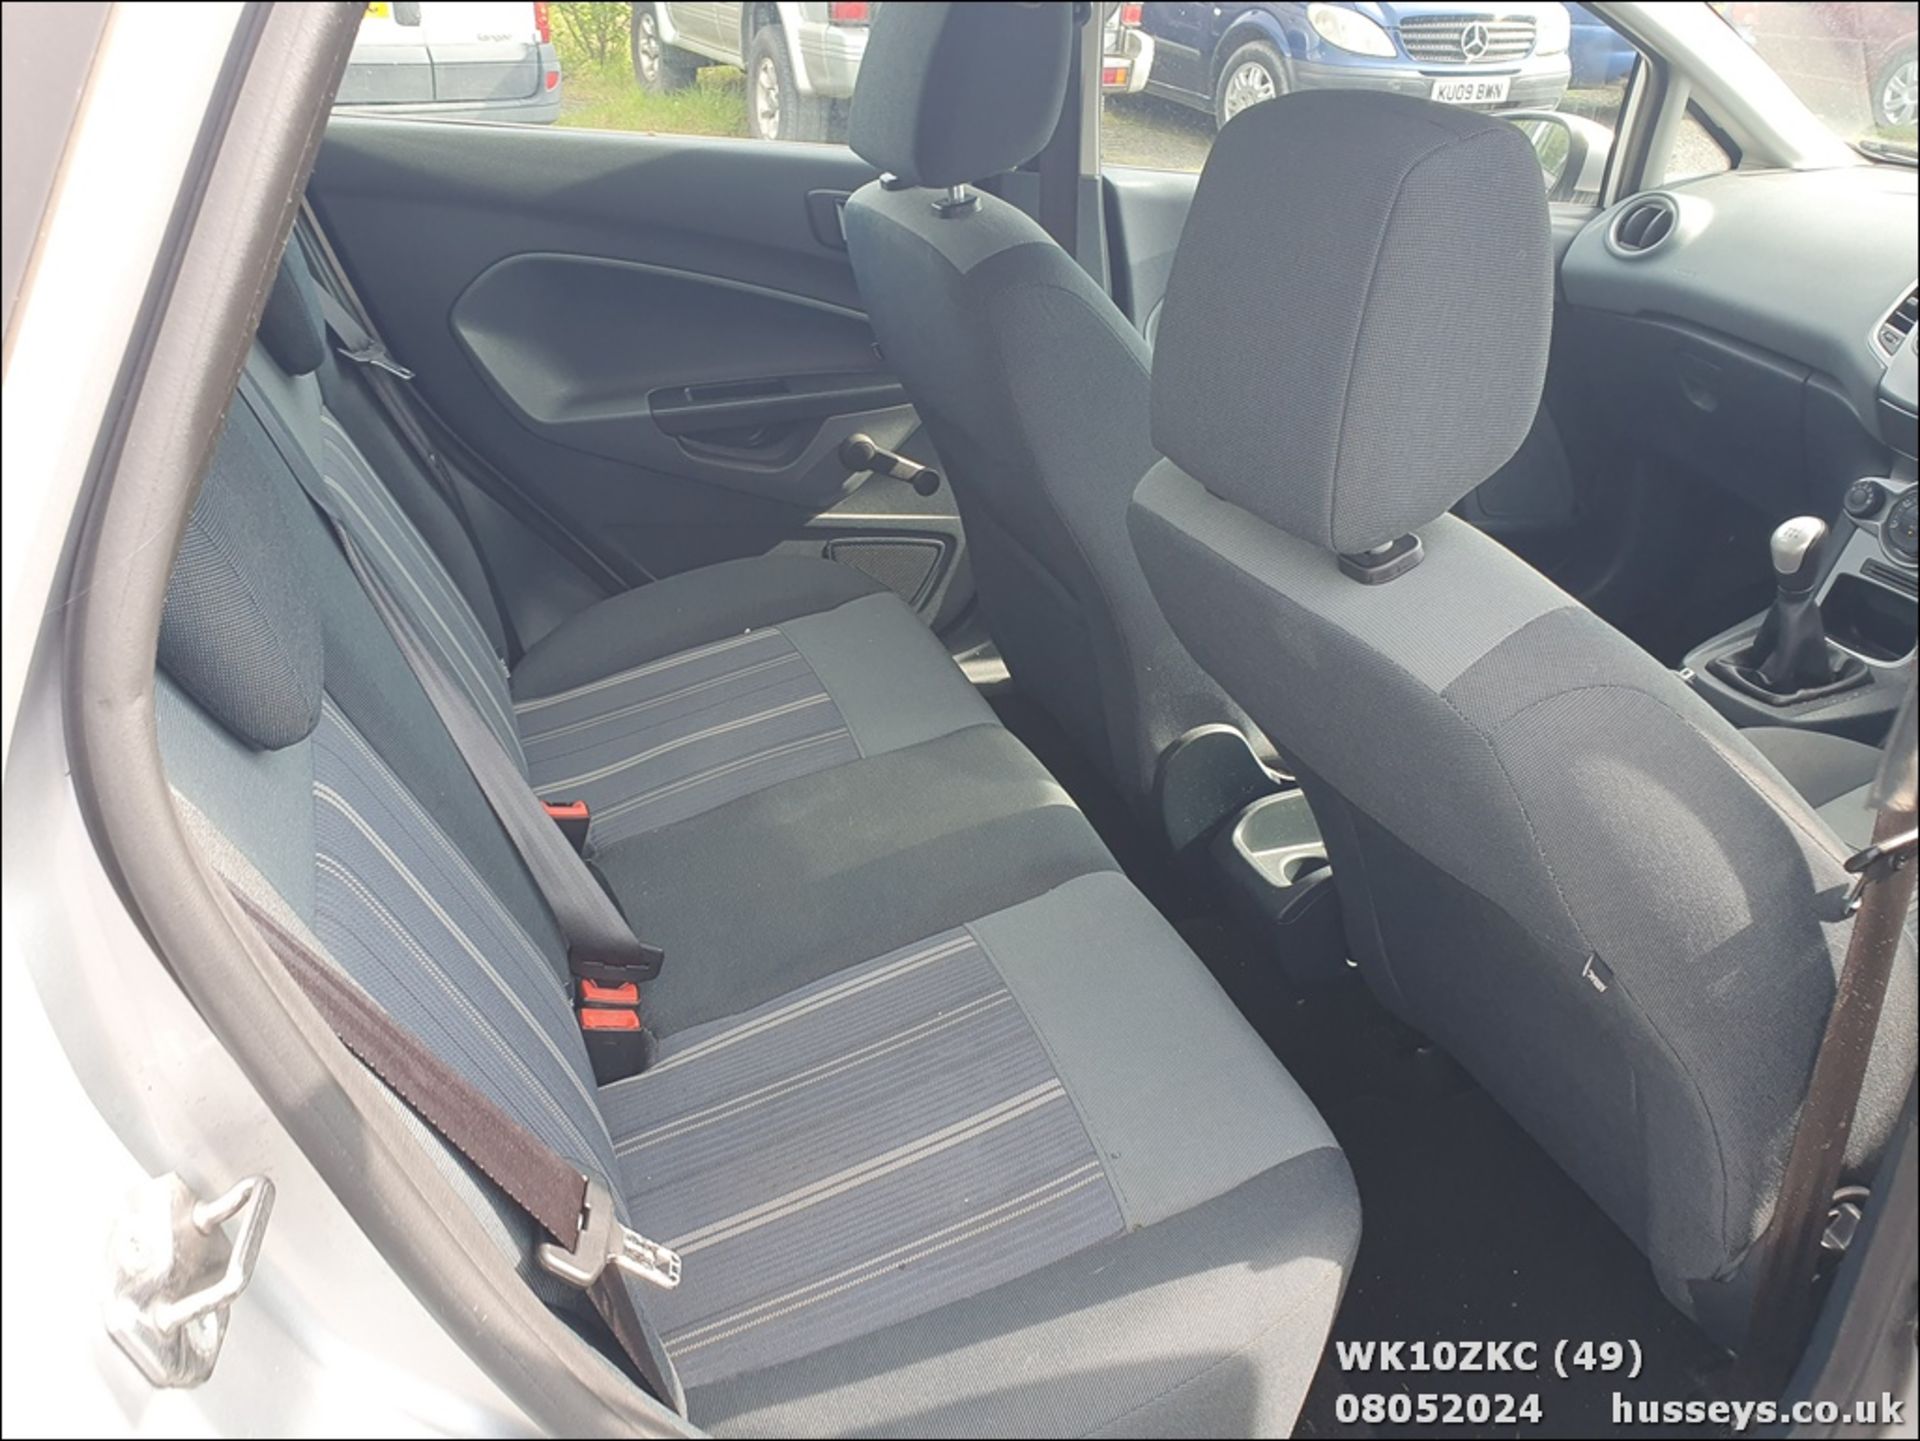 10/10 FORD FIESTA EDGE 60 - 1242cc 5dr Hatchback (Silver, 154k) - Image 50 of 53